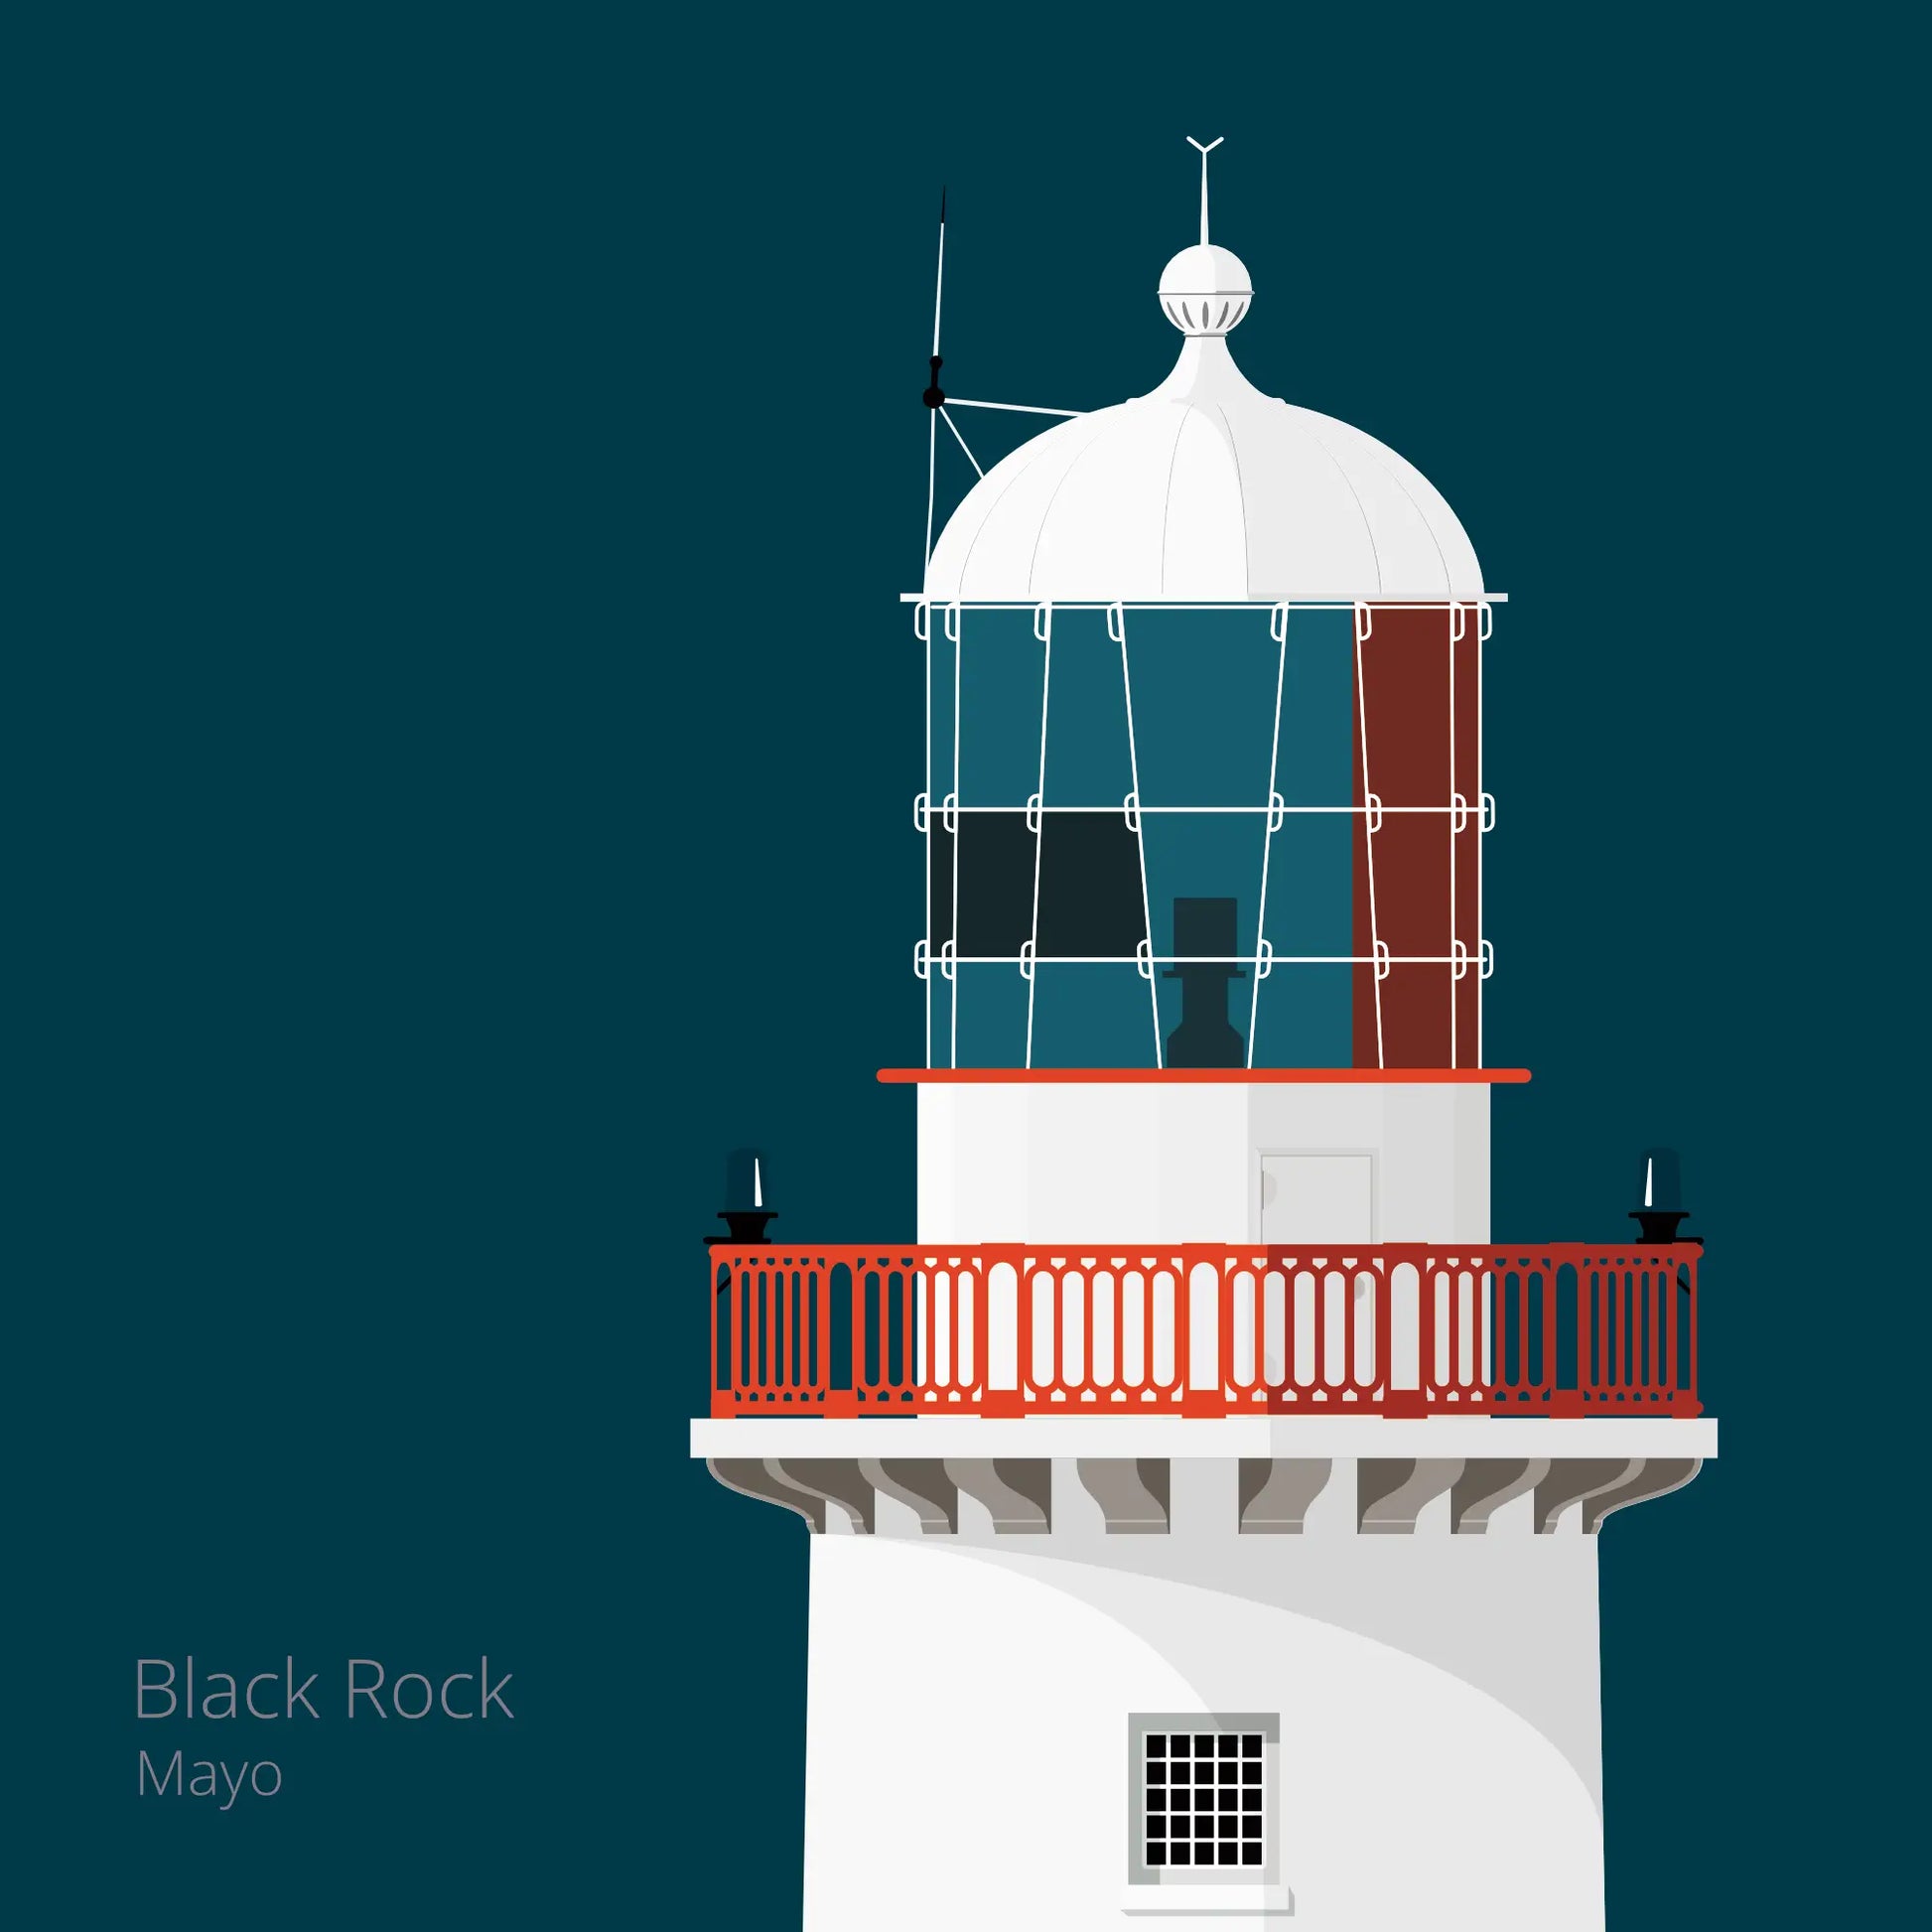 Illustration of Black Rock lighthouse on a midnight blue background